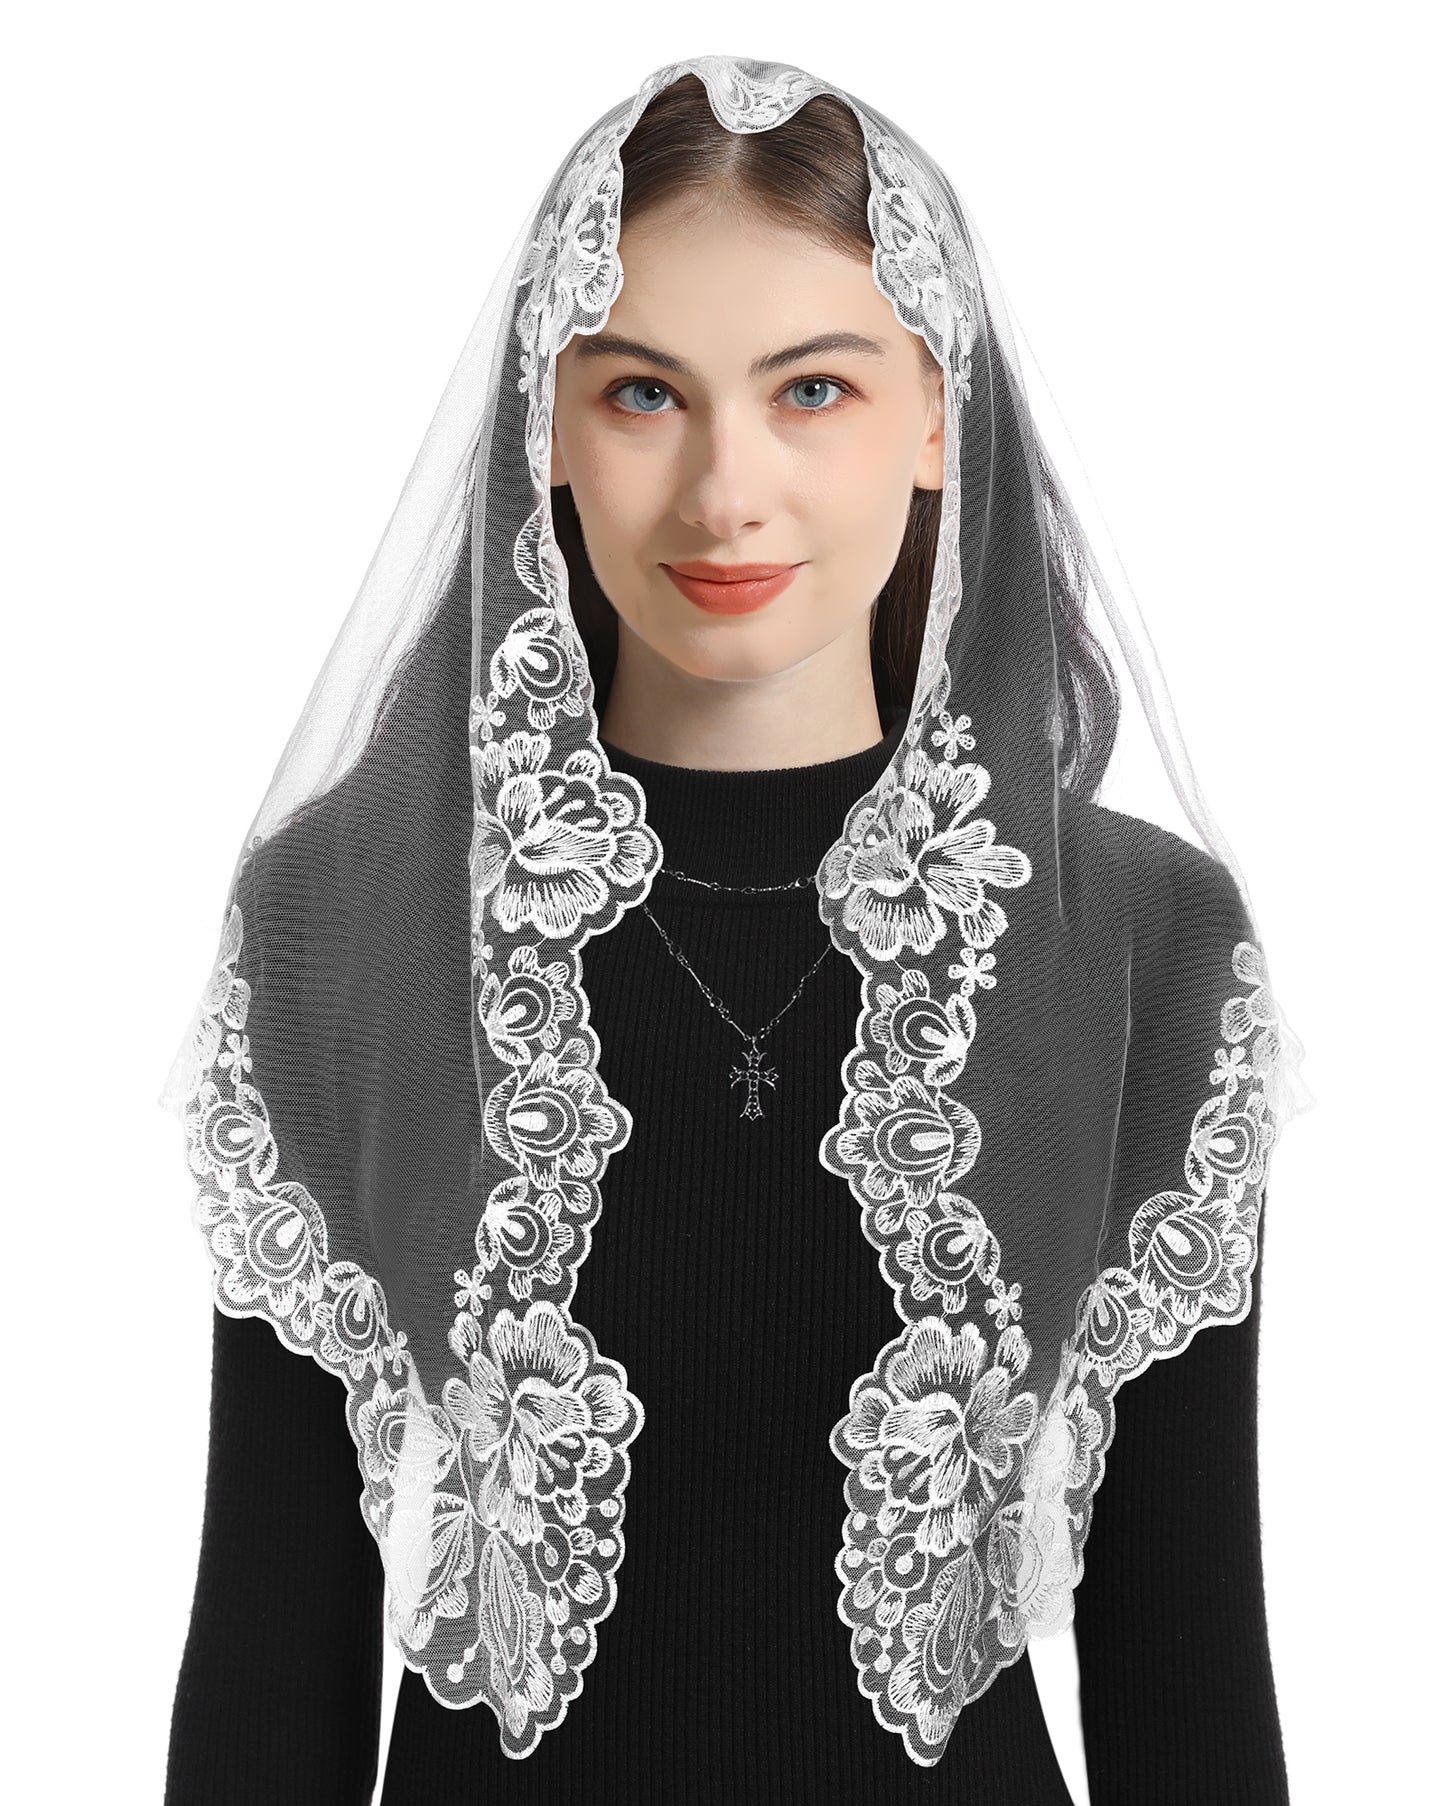 Bozidol Church Veil Triangular Mantilla - Cross Chalice Embroidered Vintage Catholic Mass Veil for Women